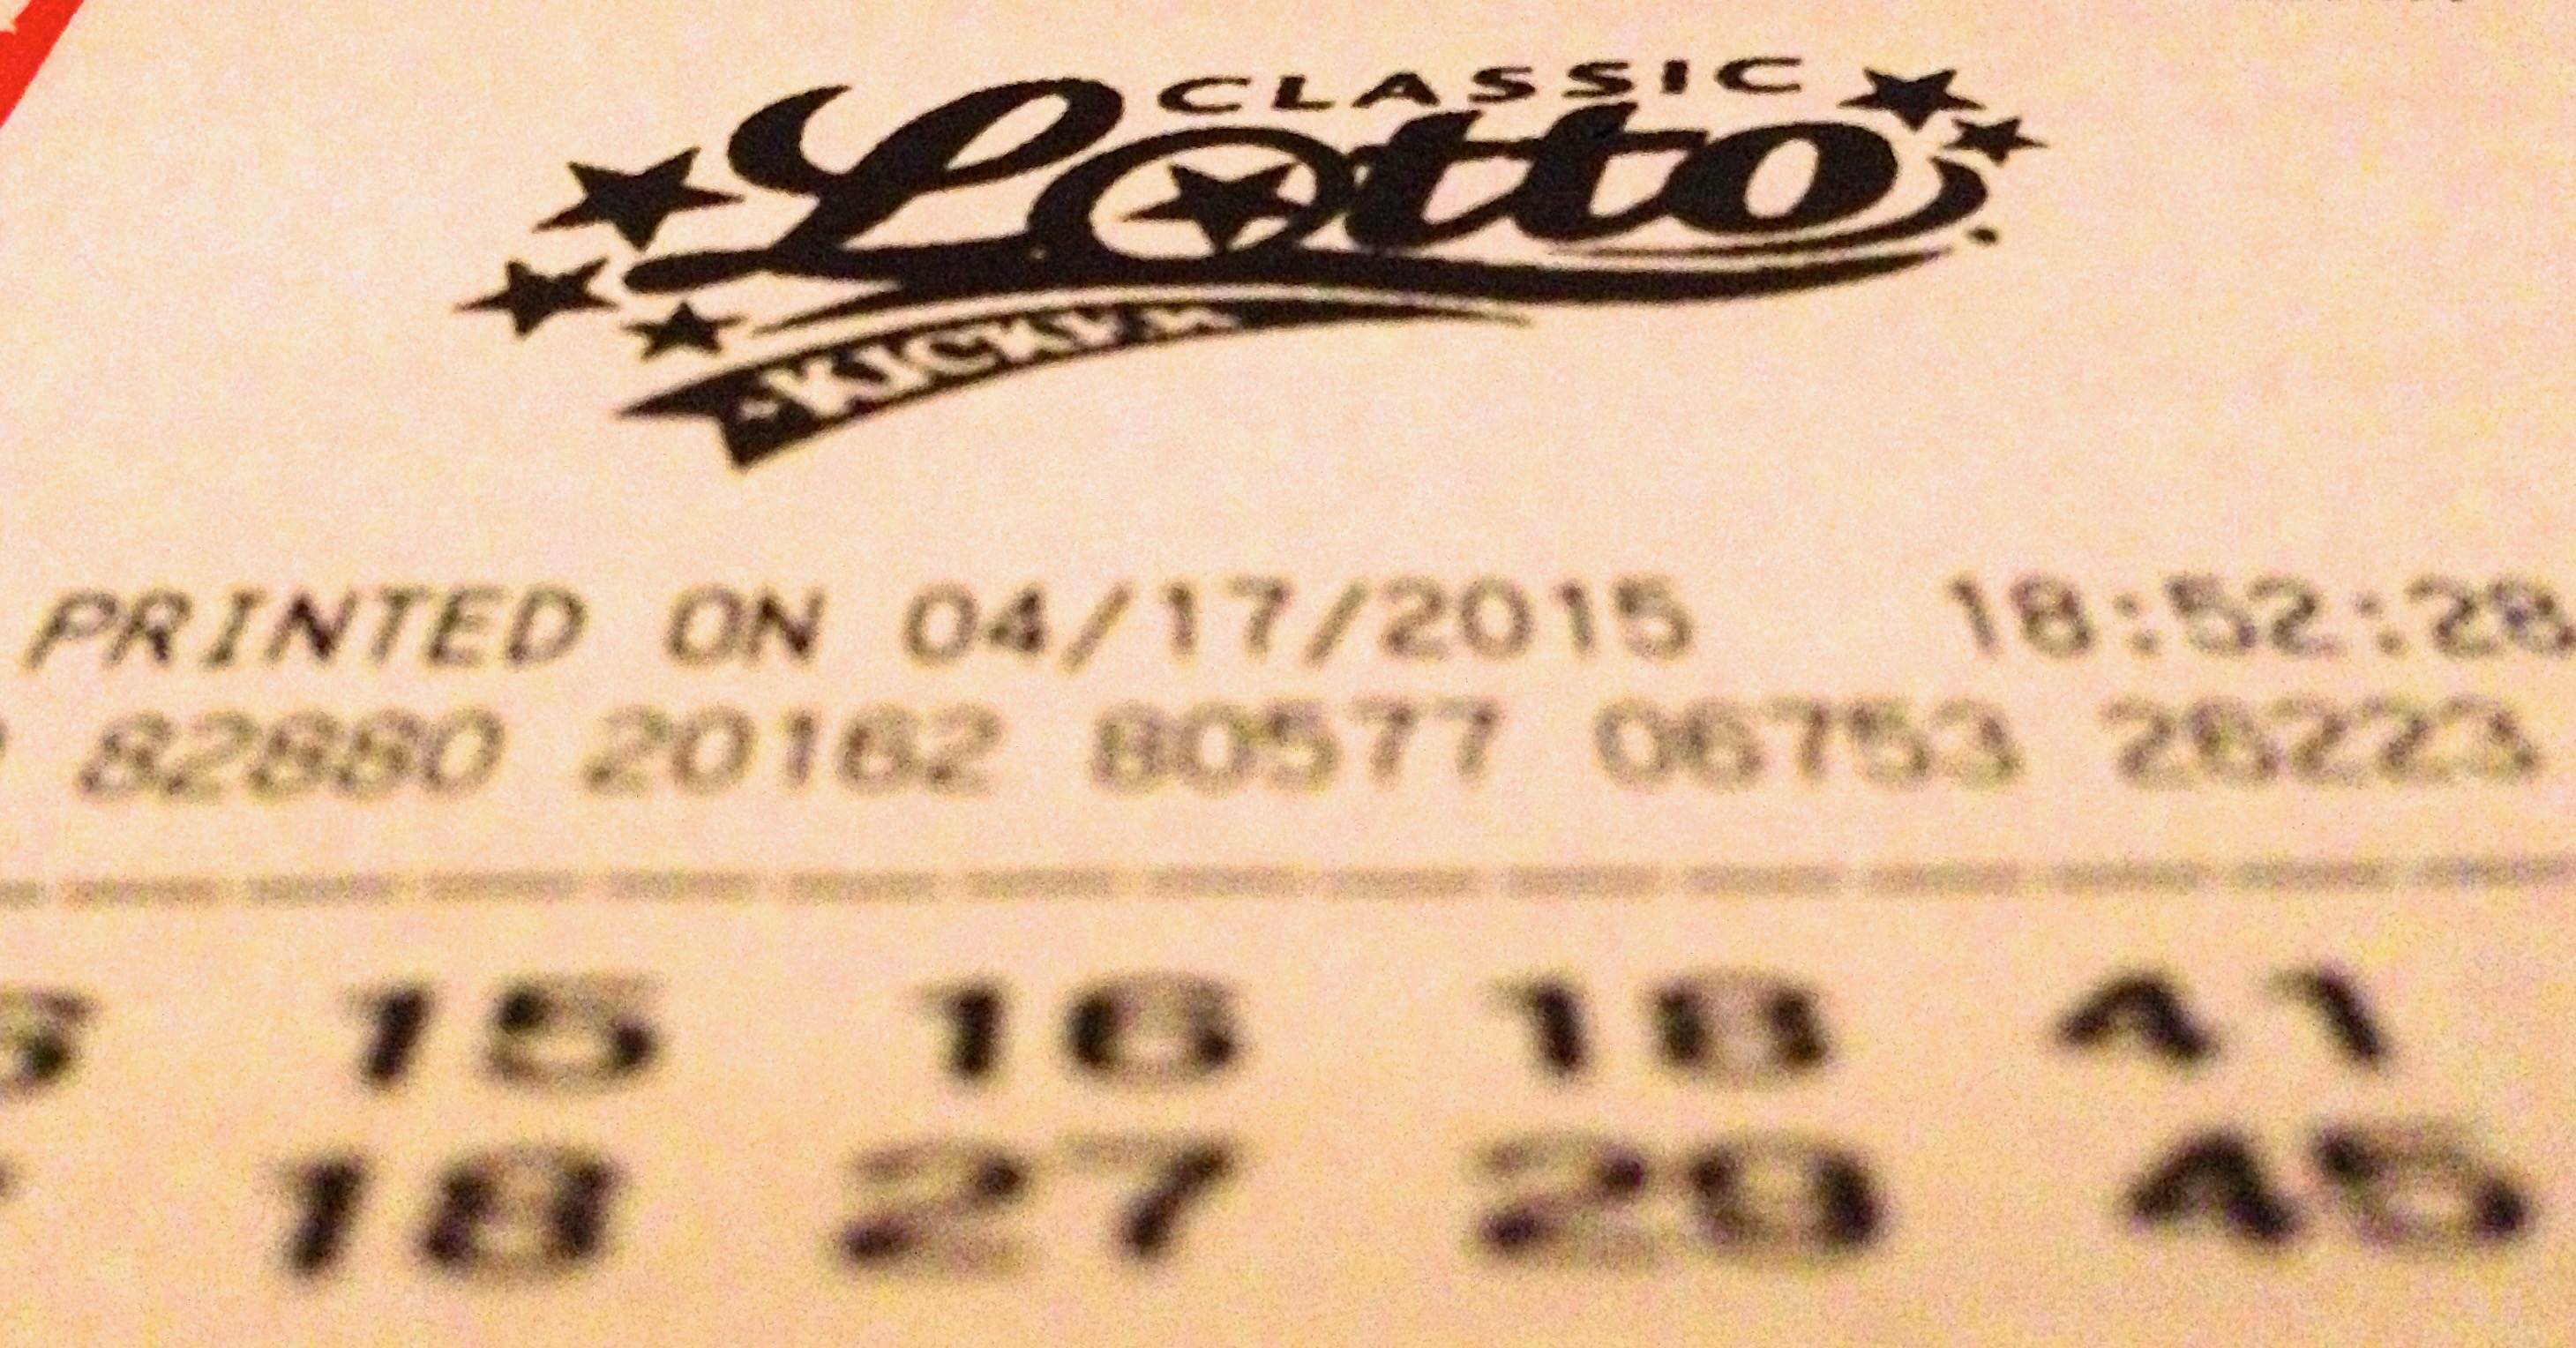 tonights ohio lottery numbers